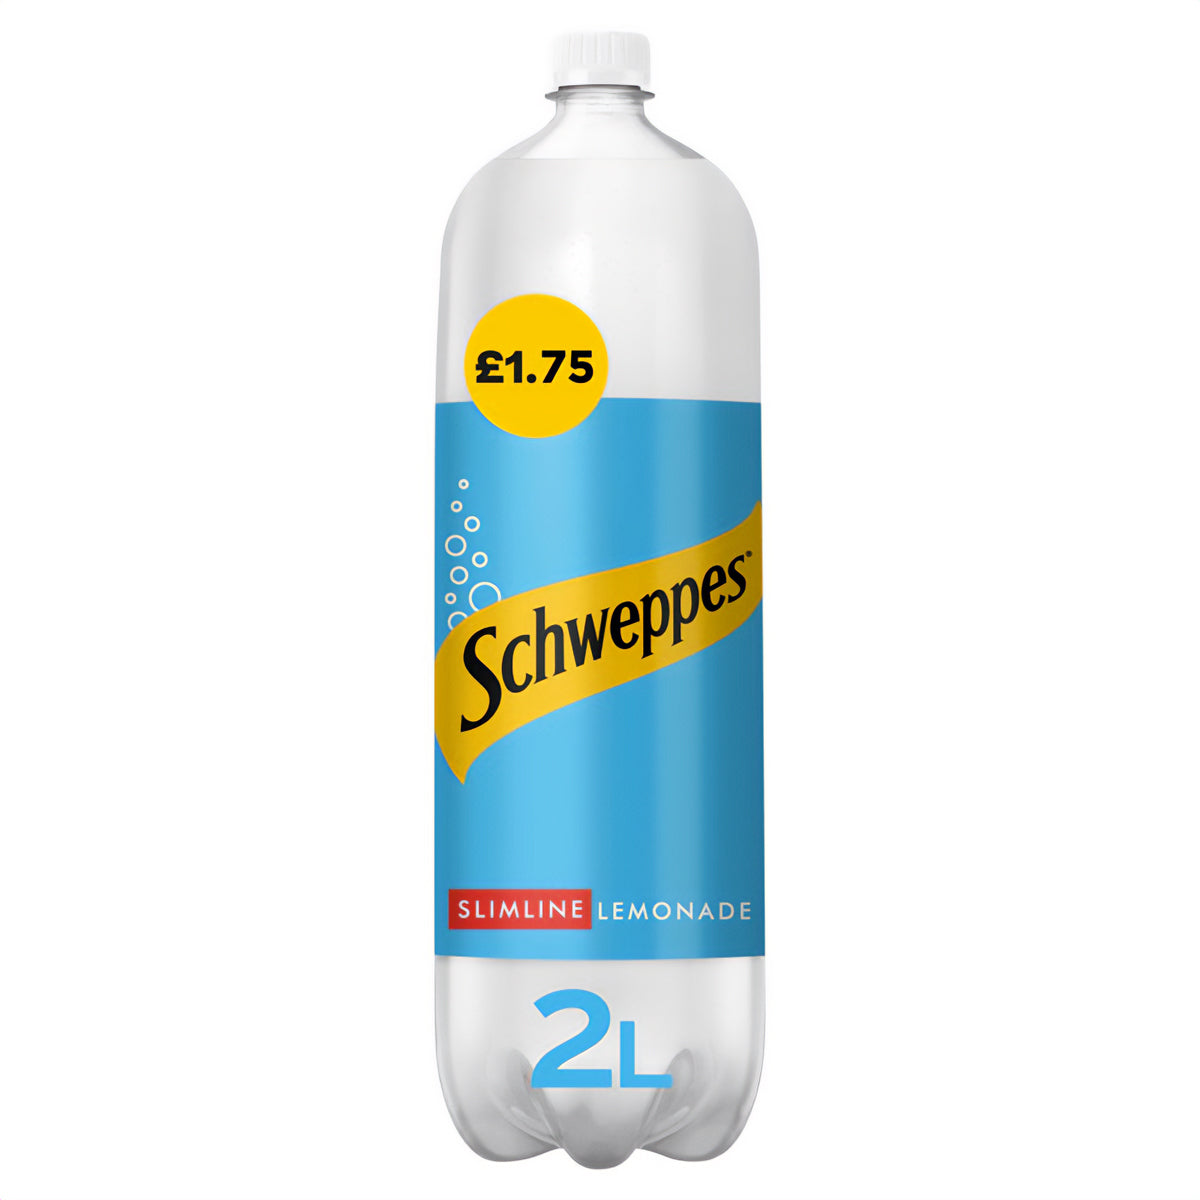 Schweppes - Slimline Lemonade Bottle - 2L - Continental Food Store